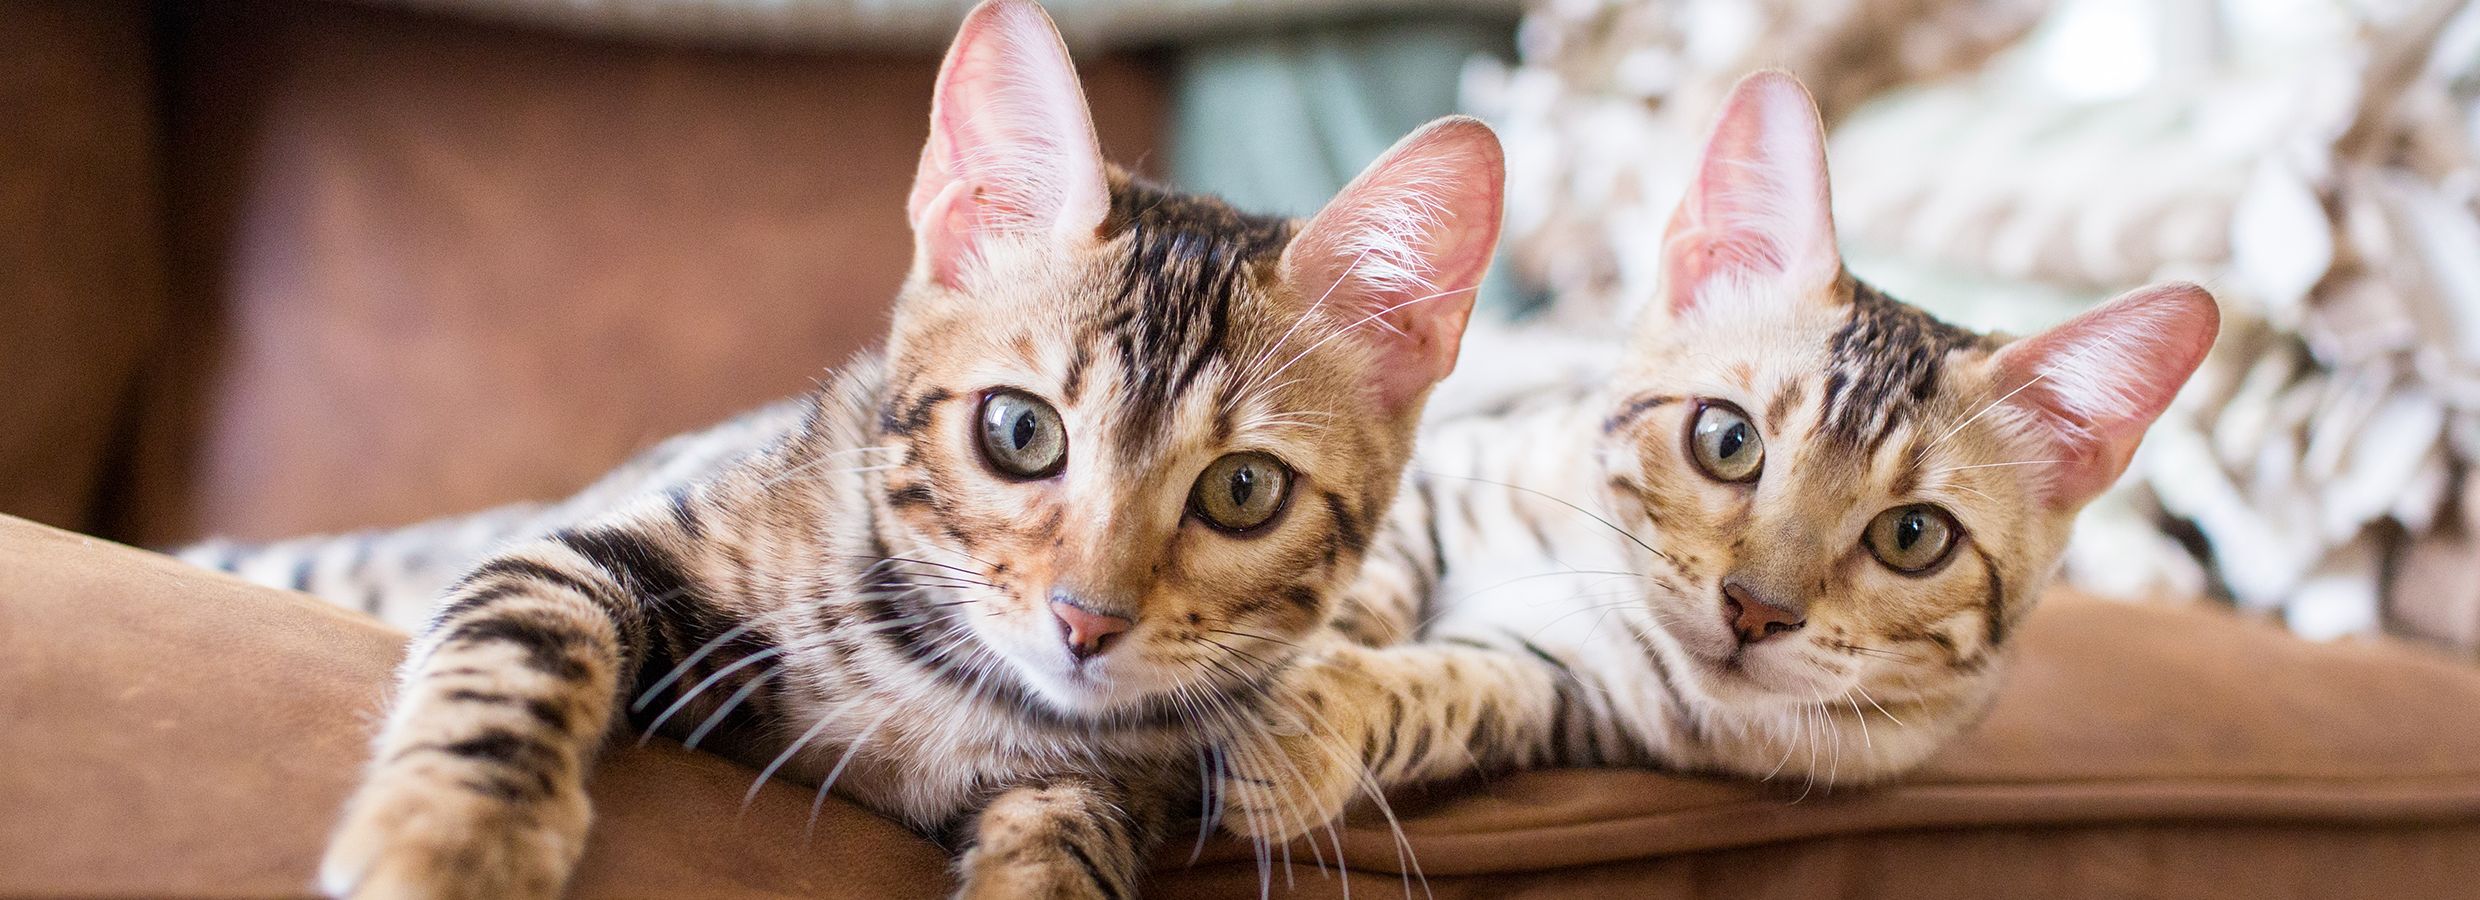 How To Litter Box Train A Kitten Or Cat Petsmart